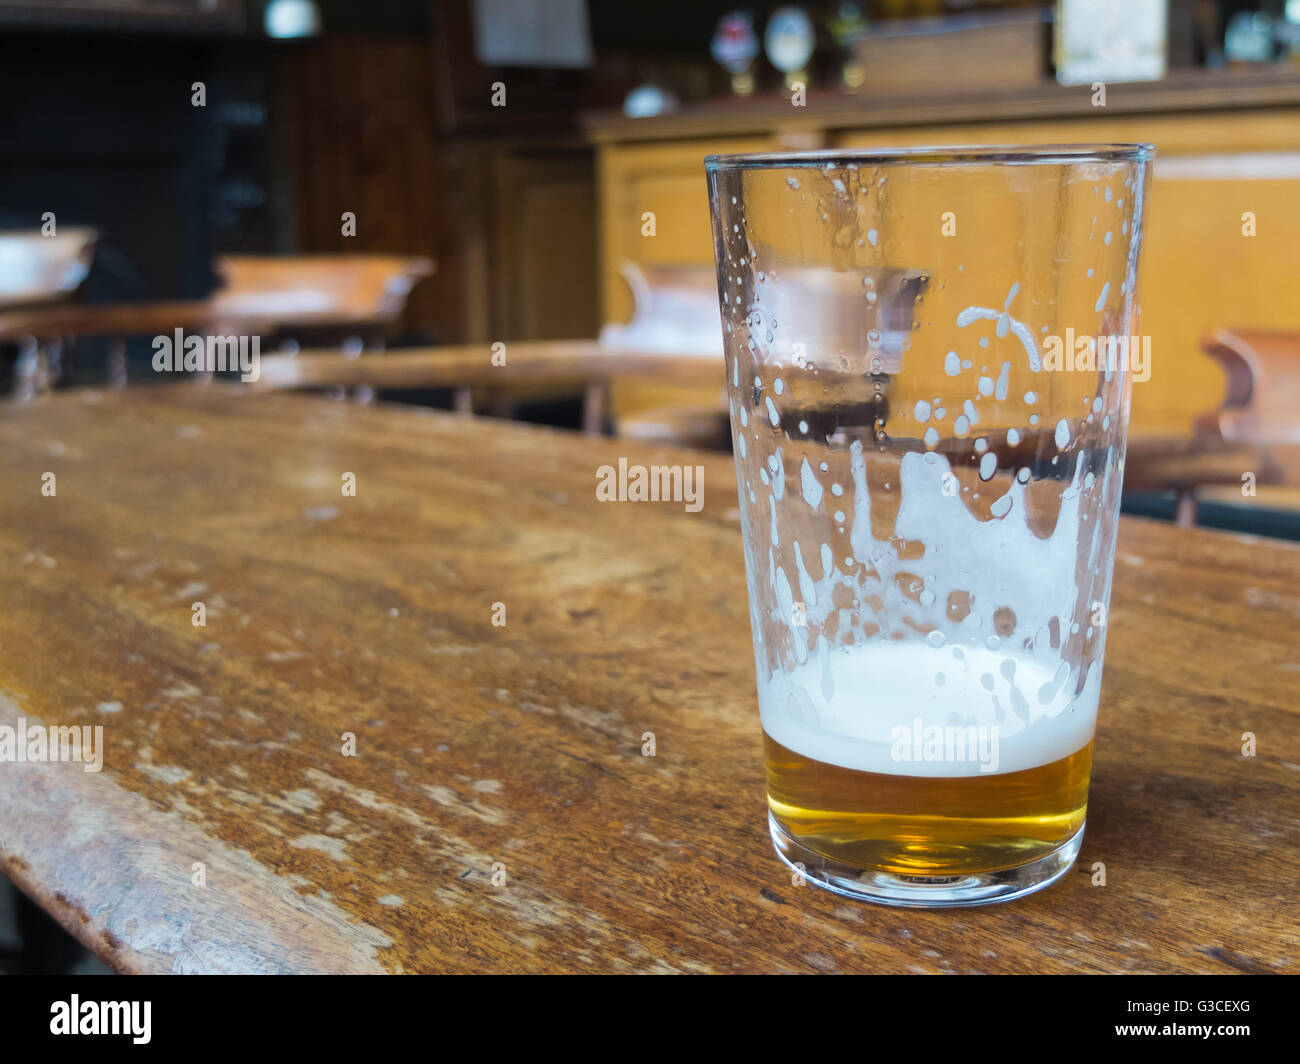 beer glass on bar table Stock Photo - Alamy